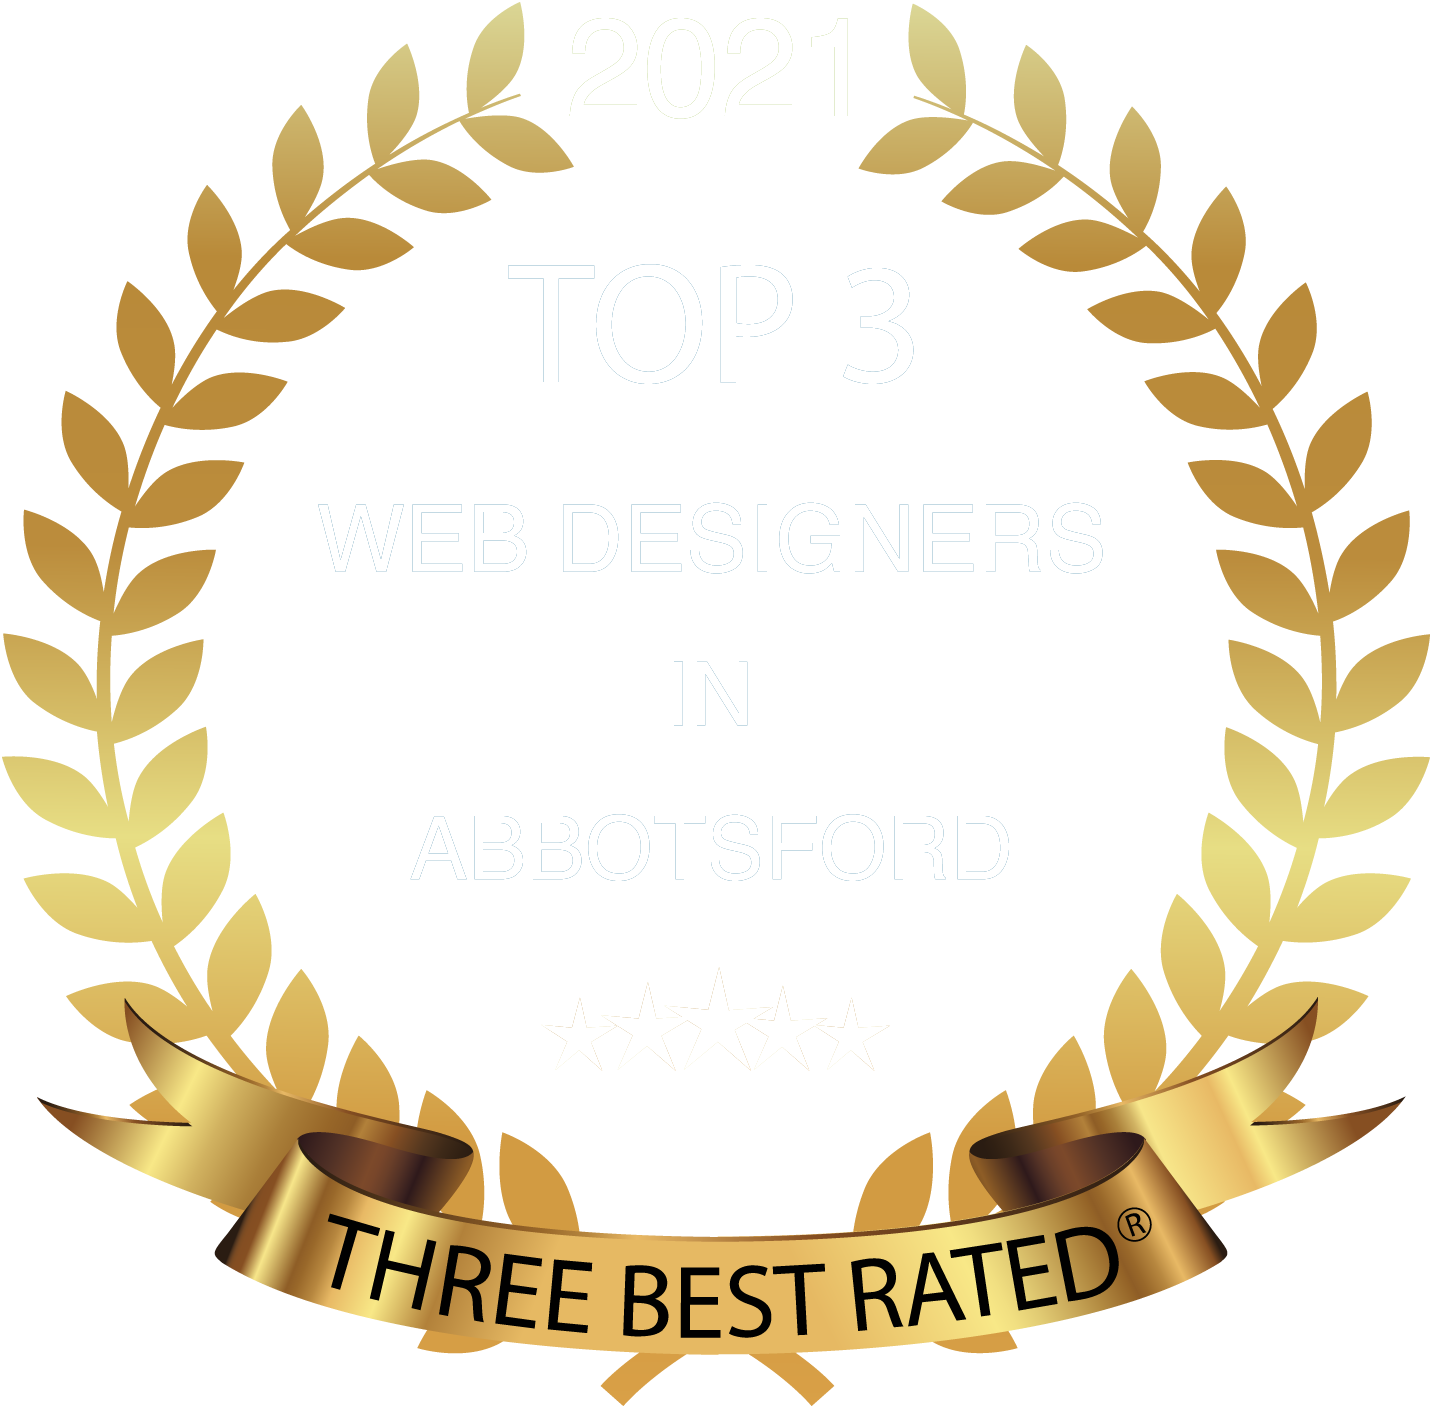 Best Web designers in Abbotsford